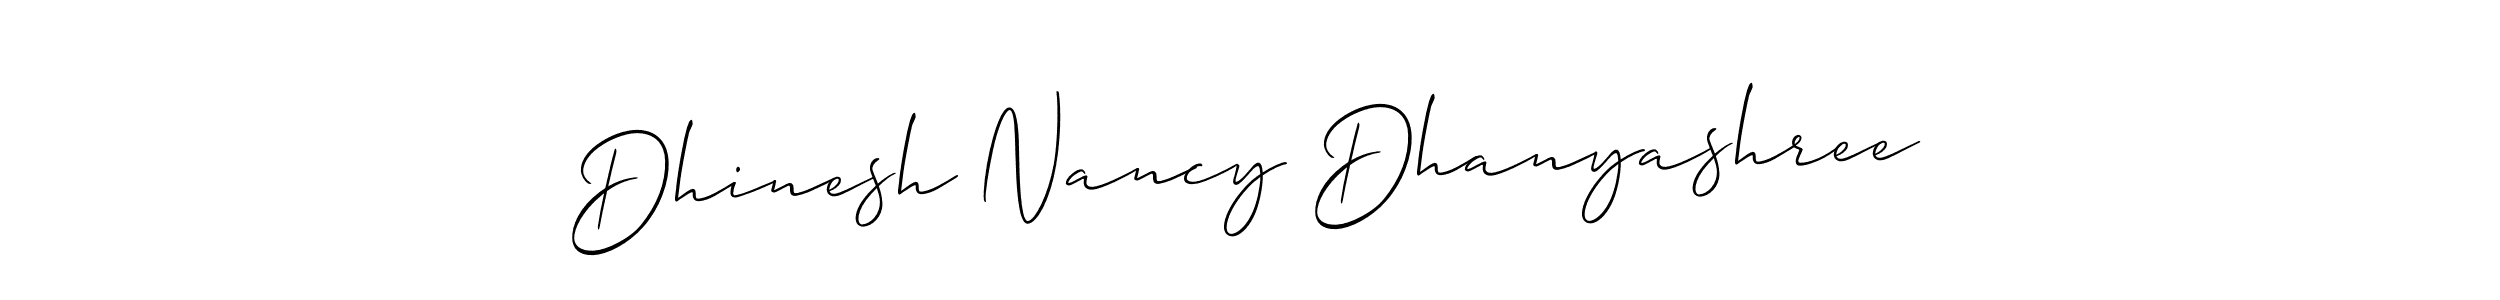 Dhinesh Nancy Dhanyashree stylish signature style. Best Handwritten Sign (Allison_Script) for my name. Handwritten Signature Collection Ideas for my name Dhinesh Nancy Dhanyashree. Dhinesh Nancy Dhanyashree signature style 2 images and pictures png